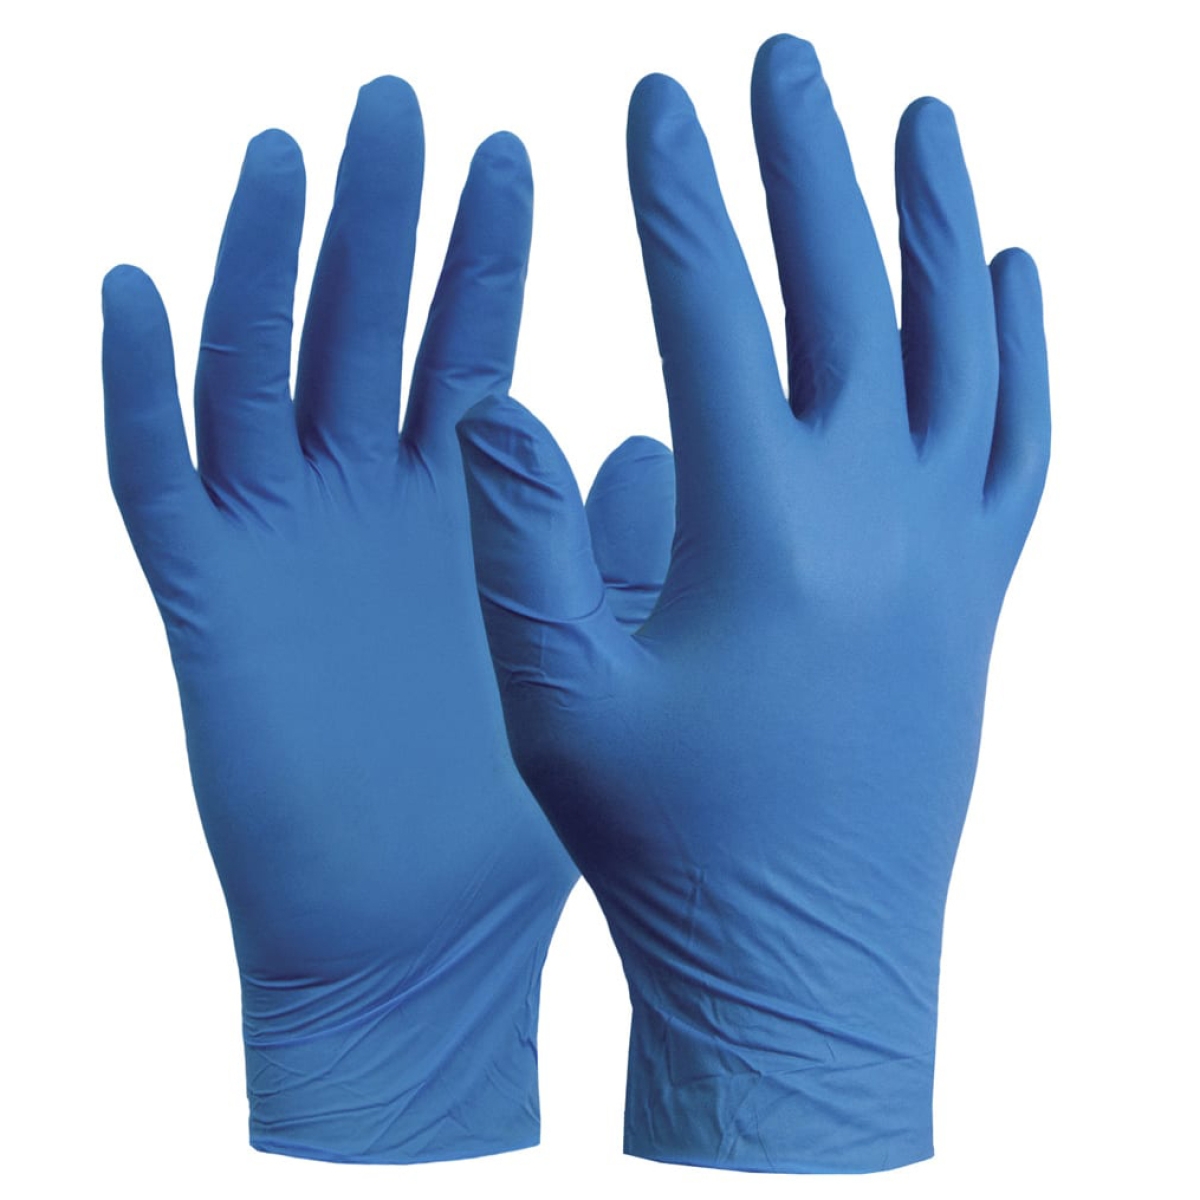 Esko High Five Industrial Blue Nitrile Disposable Gloves (100 Pack)